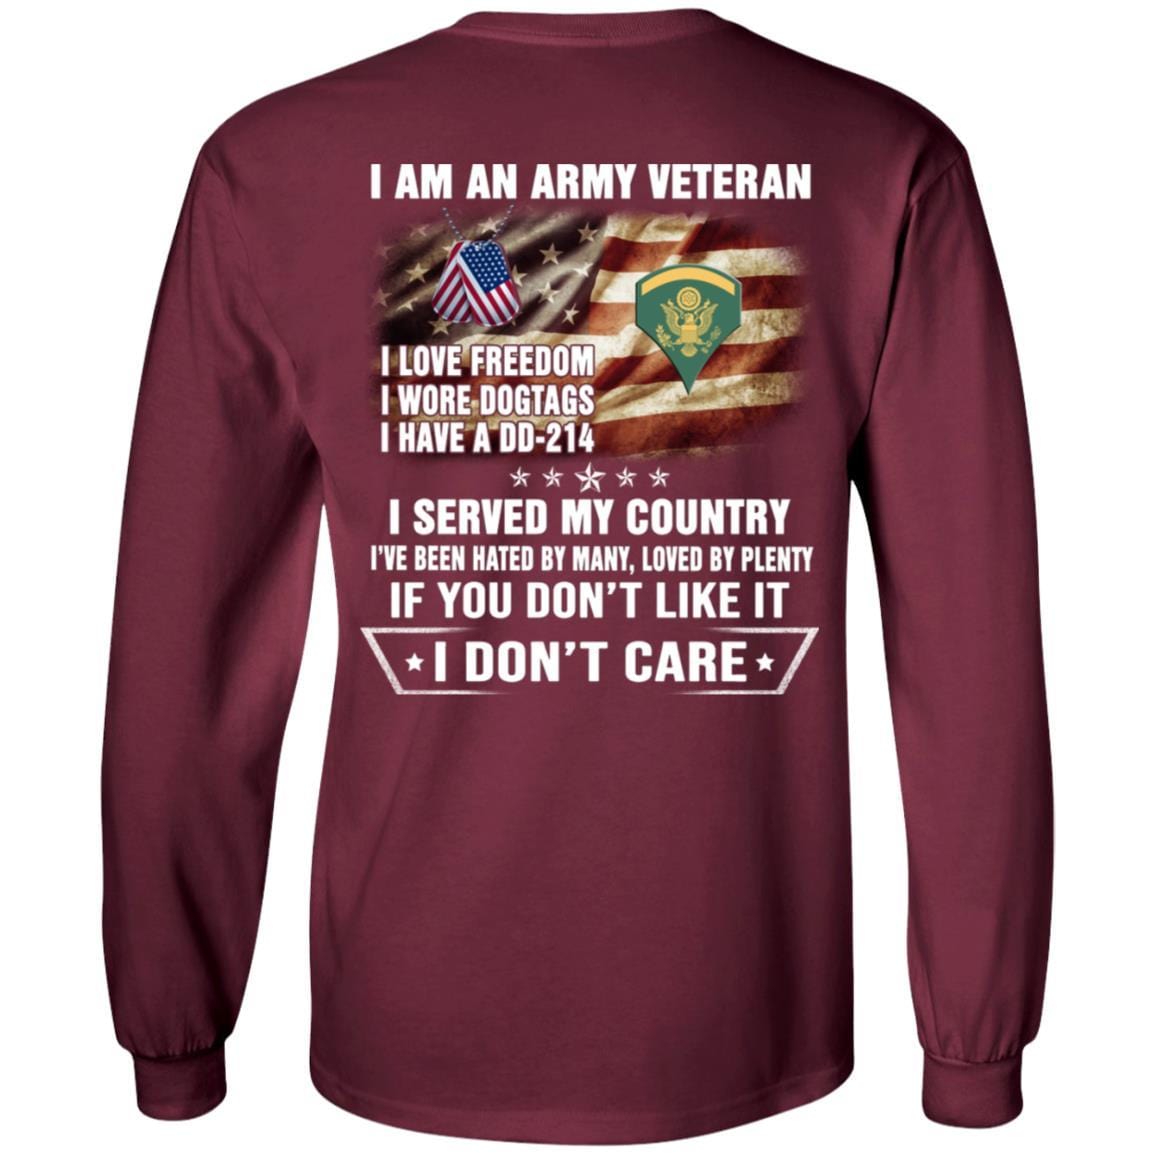 T-Shirt "I Am An Army Veteran" E-5 SPC(SP5)Rank On Back-TShirt-Army-Veterans Nation